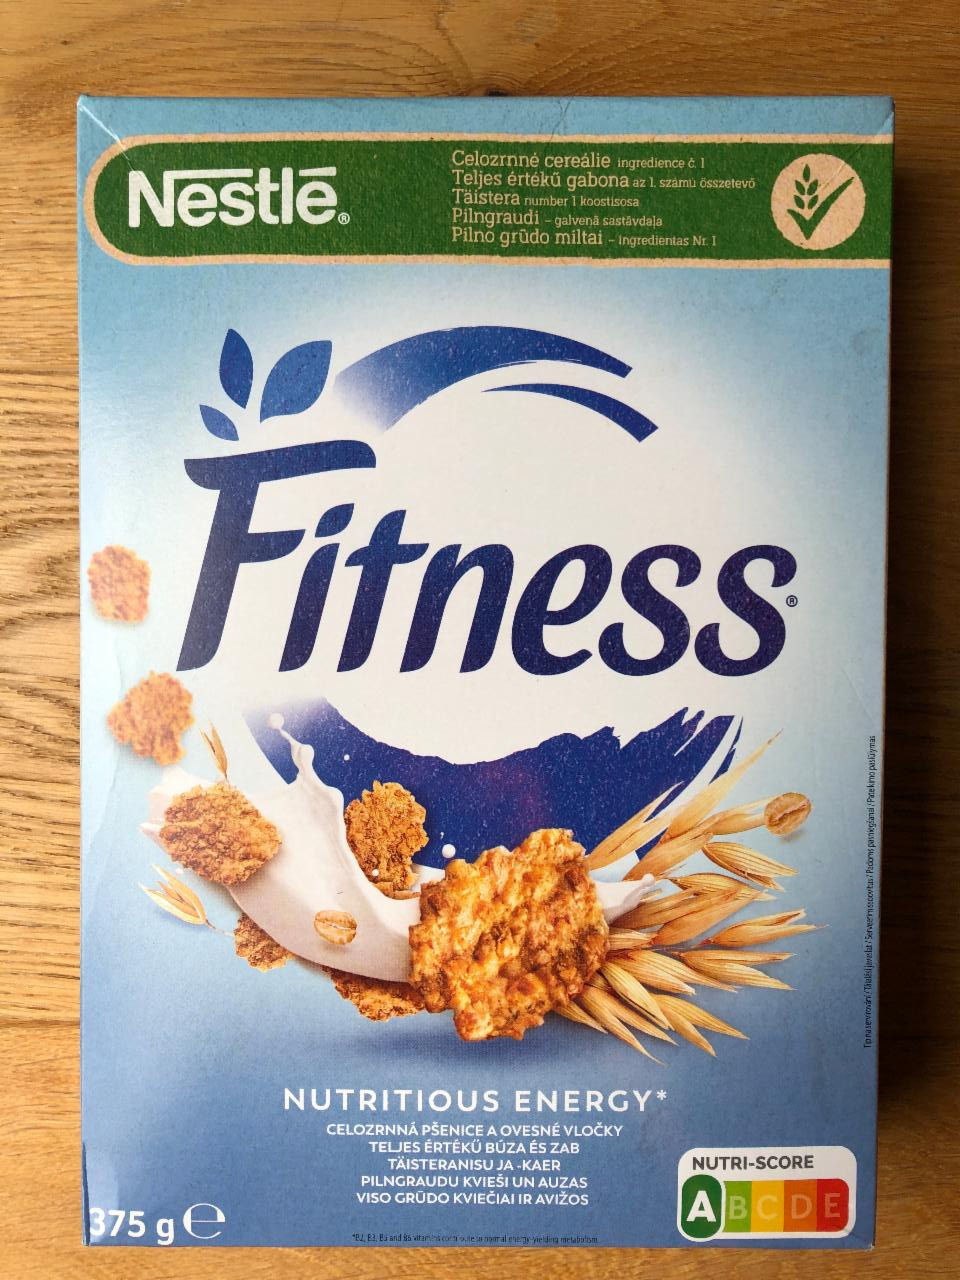 Zdjęcia - Fitness Nutritious Energy Nestlé